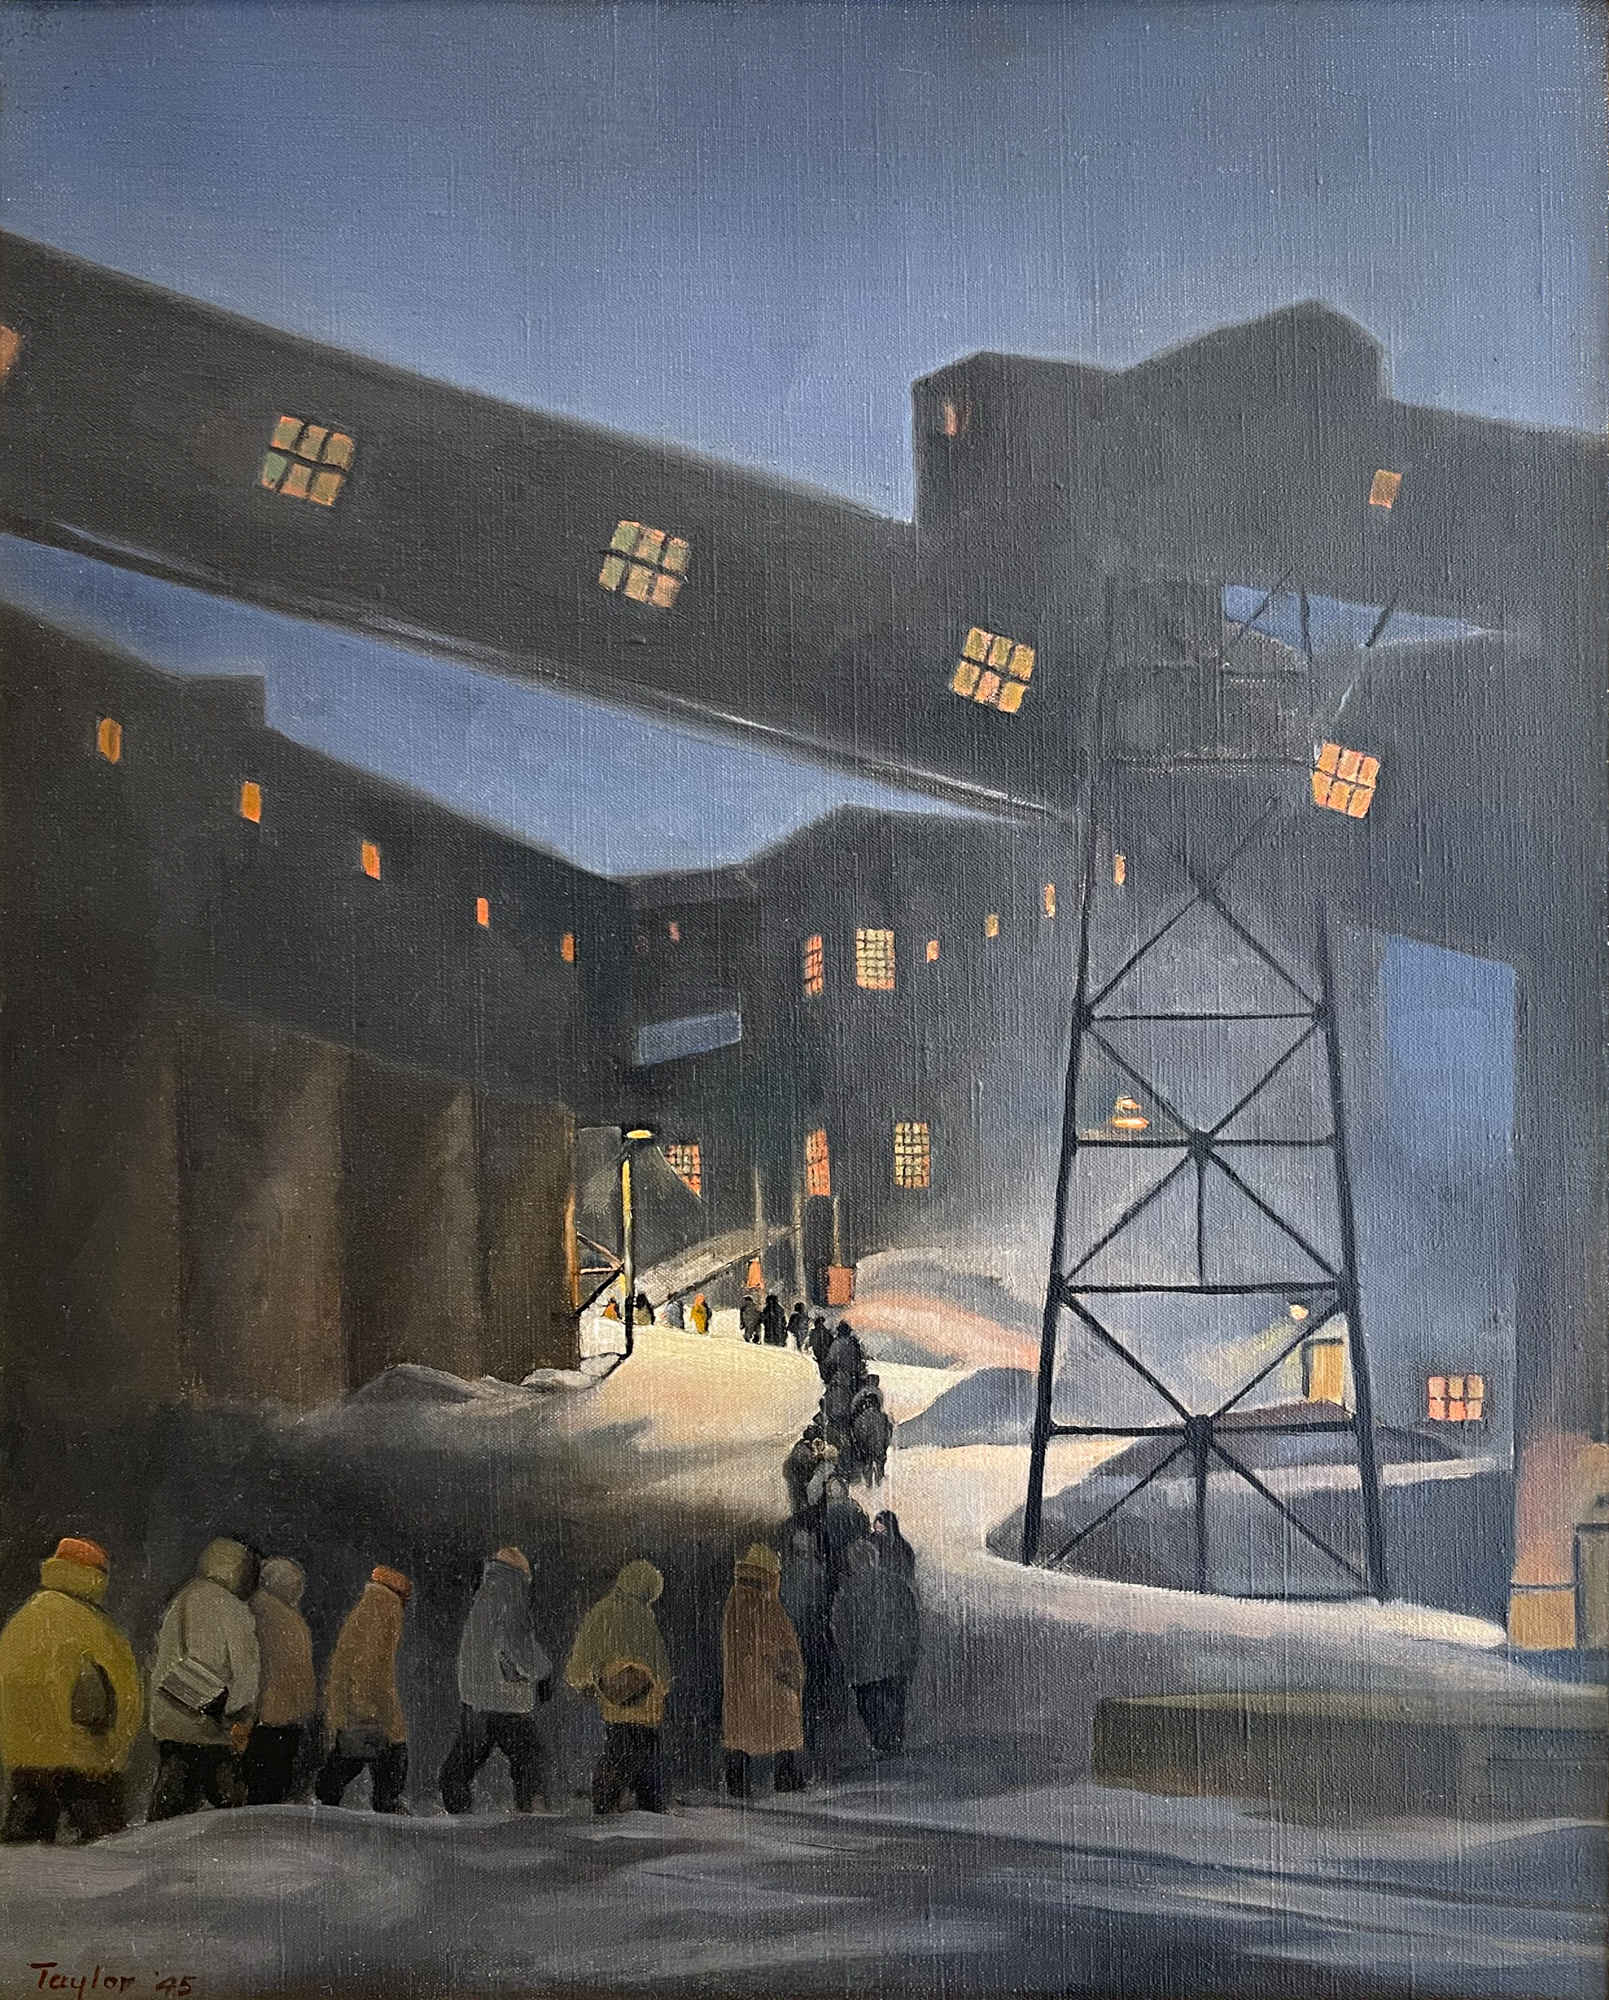 Miners Going to Work, 6:30am (Noranda)